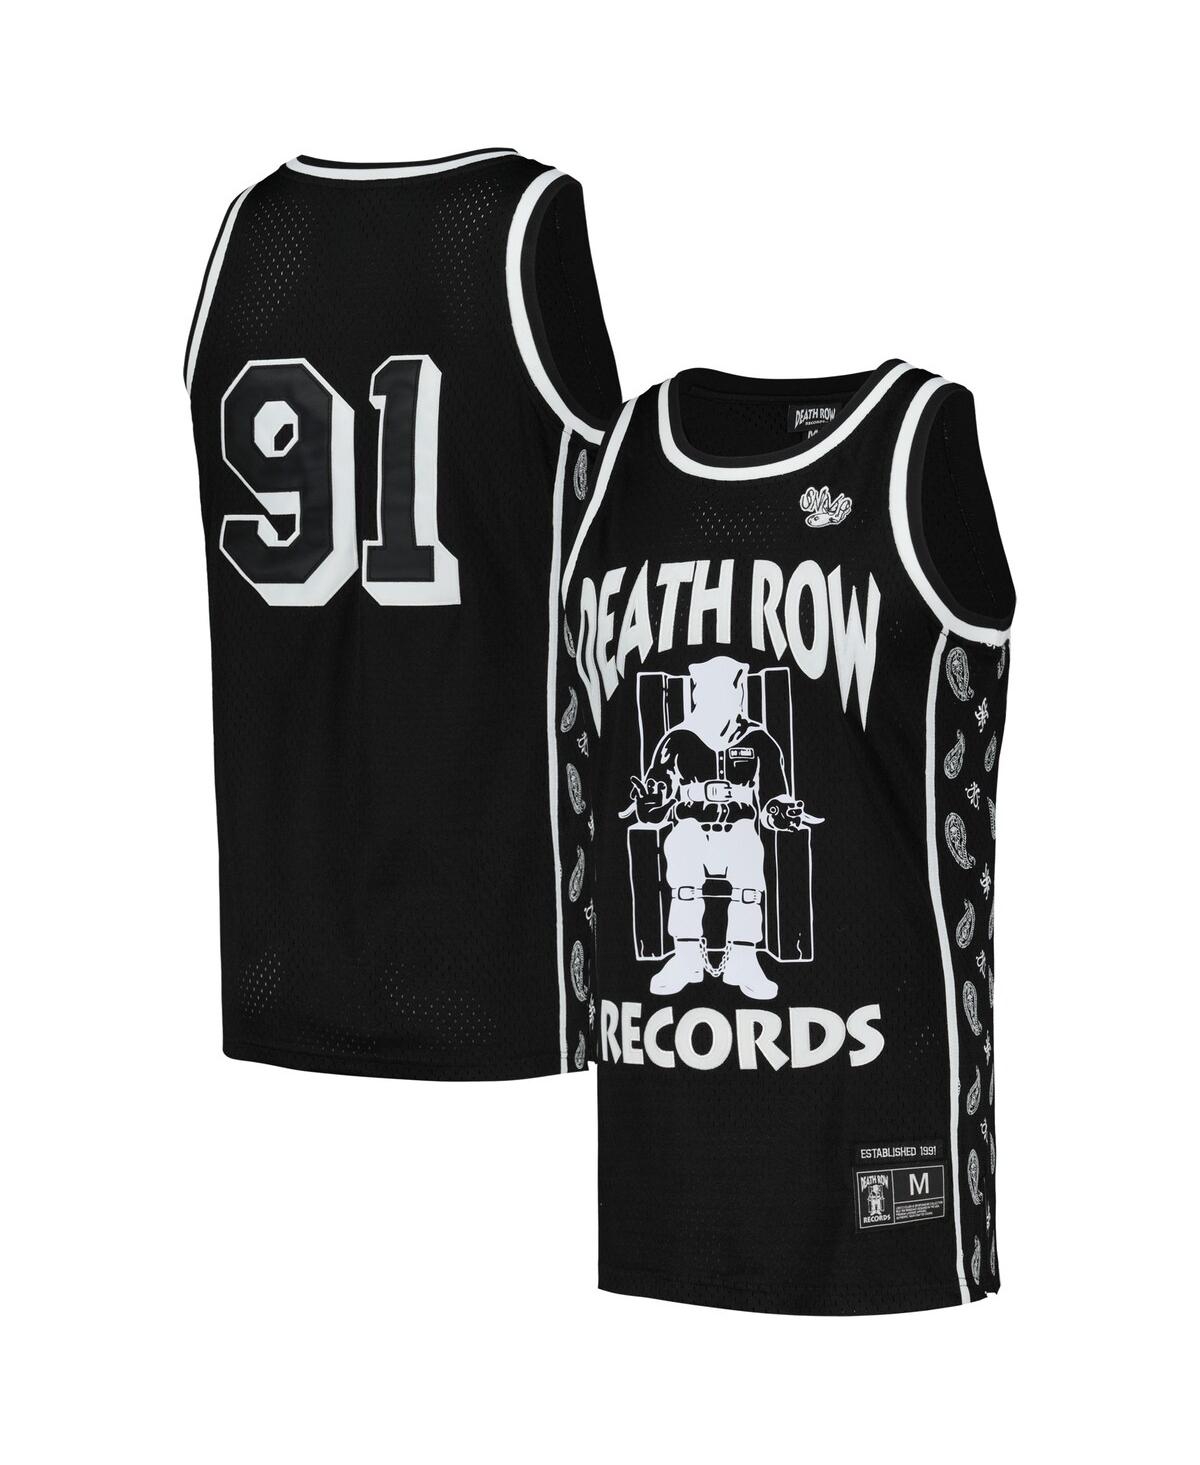 Men's Black Death Row Records Basketball Jersey - Black